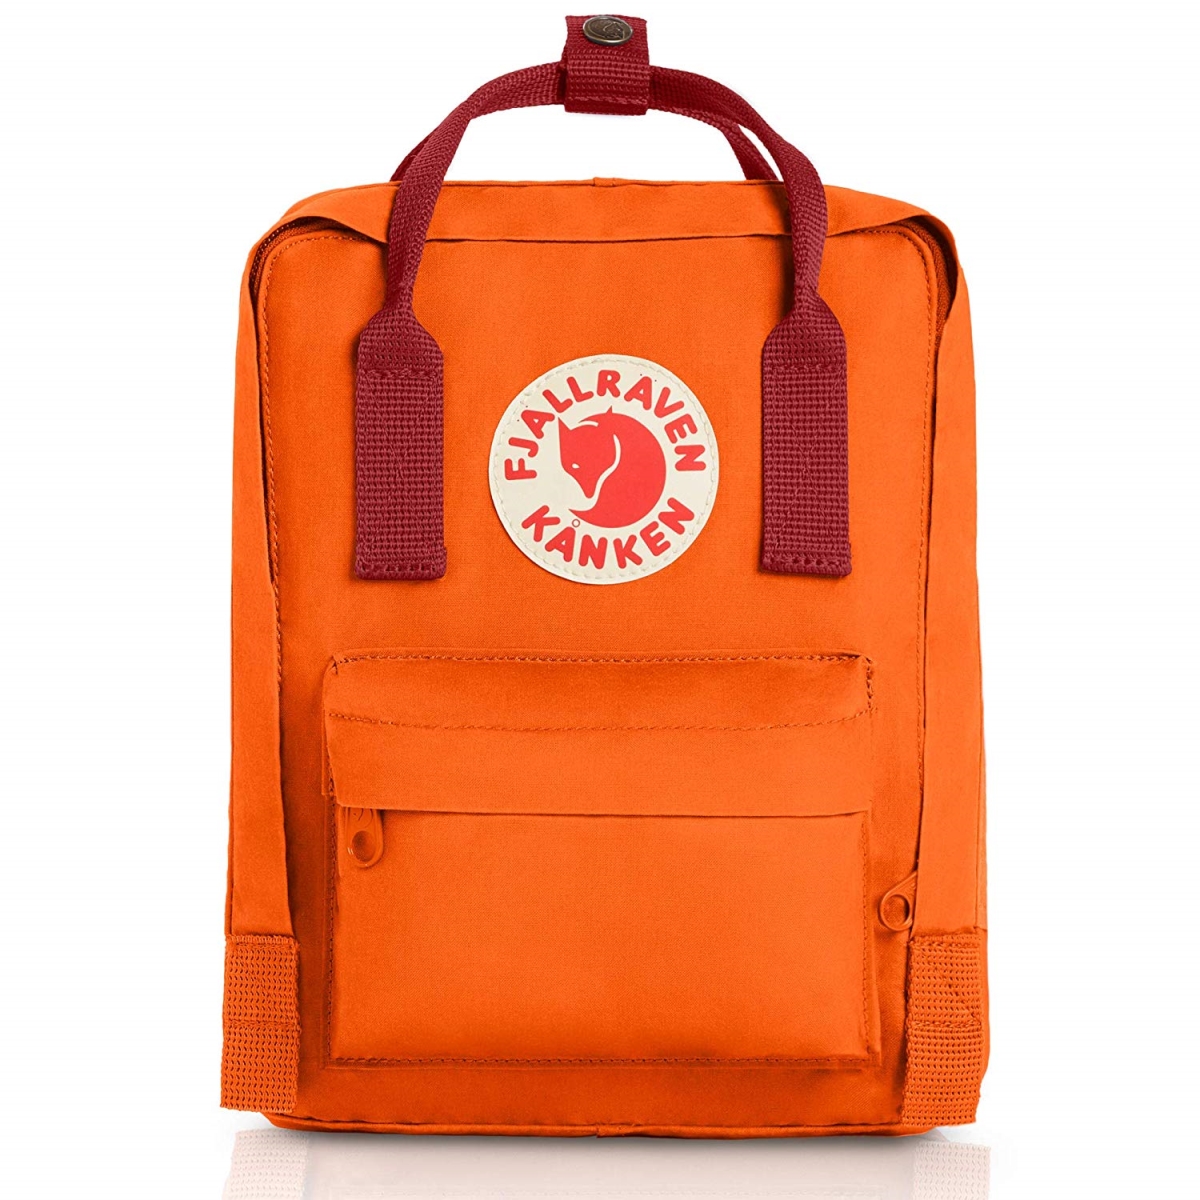 23561-212-325 Kanken Mini Classic Backpack For Everyday - Burnt Orange & Deep Red